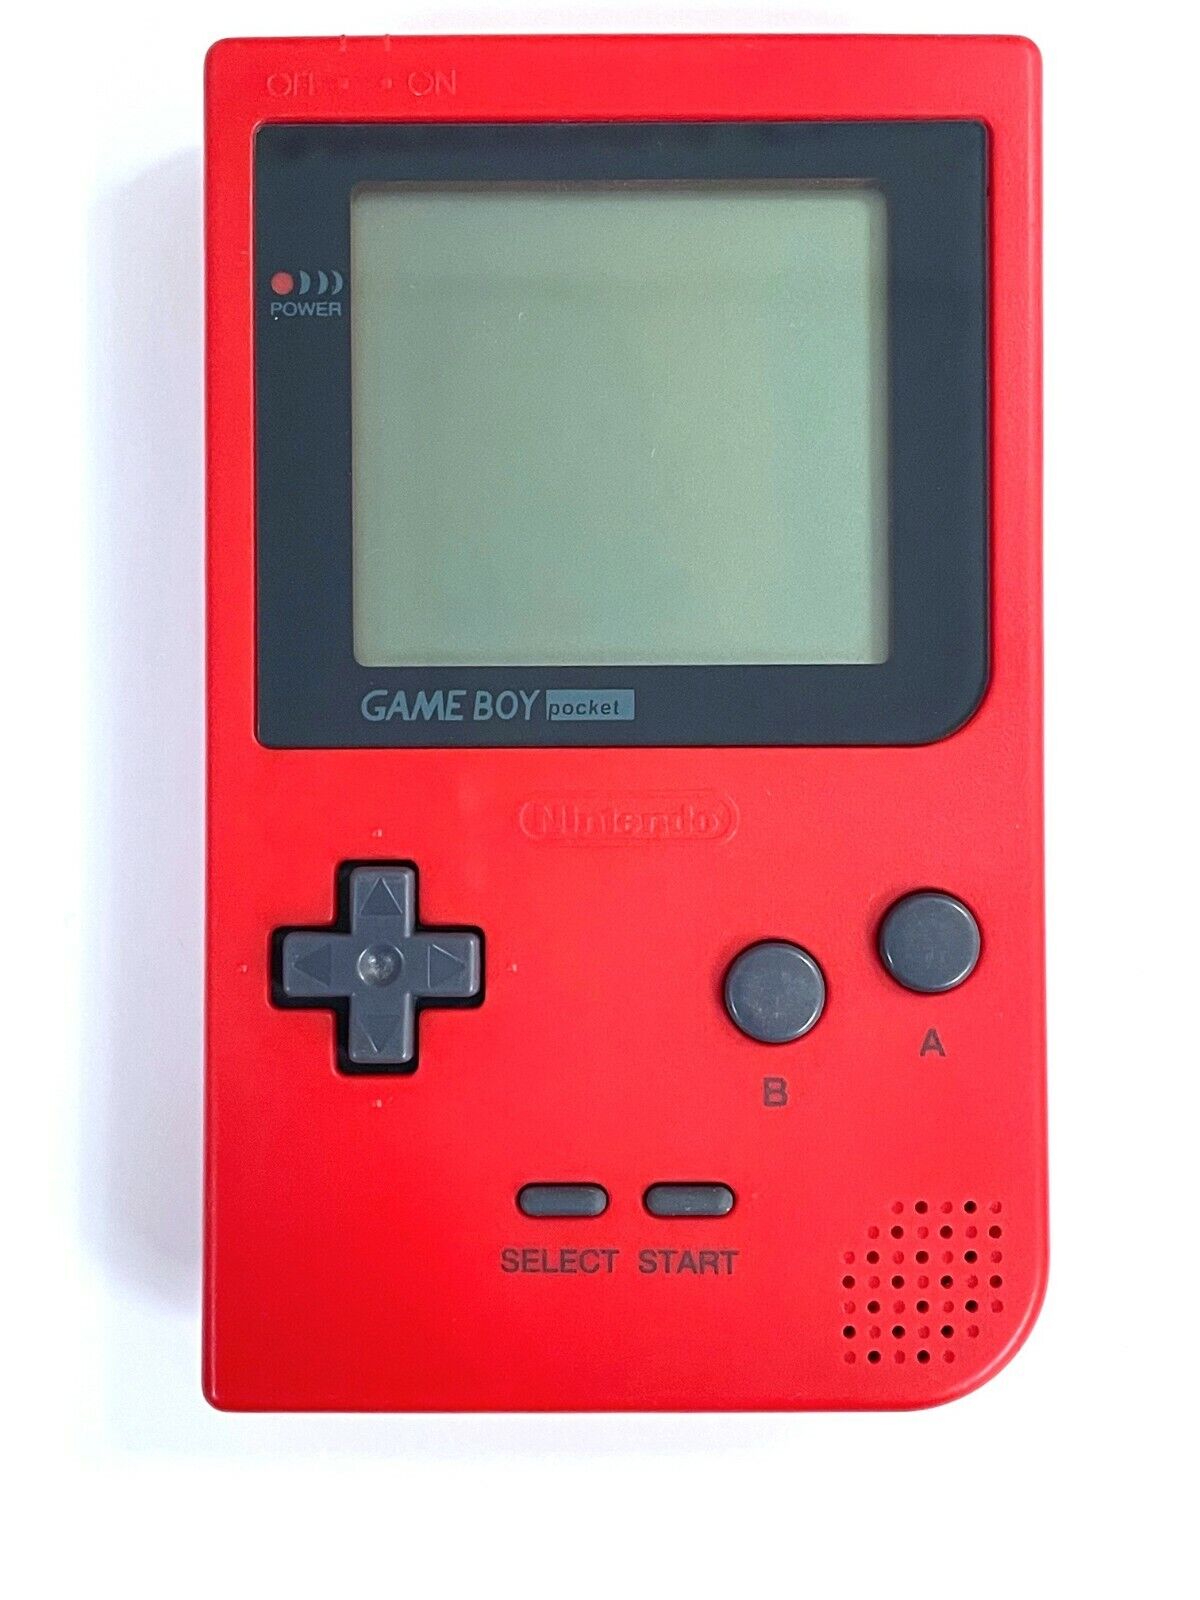 Nintendo Game Boy Pocket Handheld Console Red